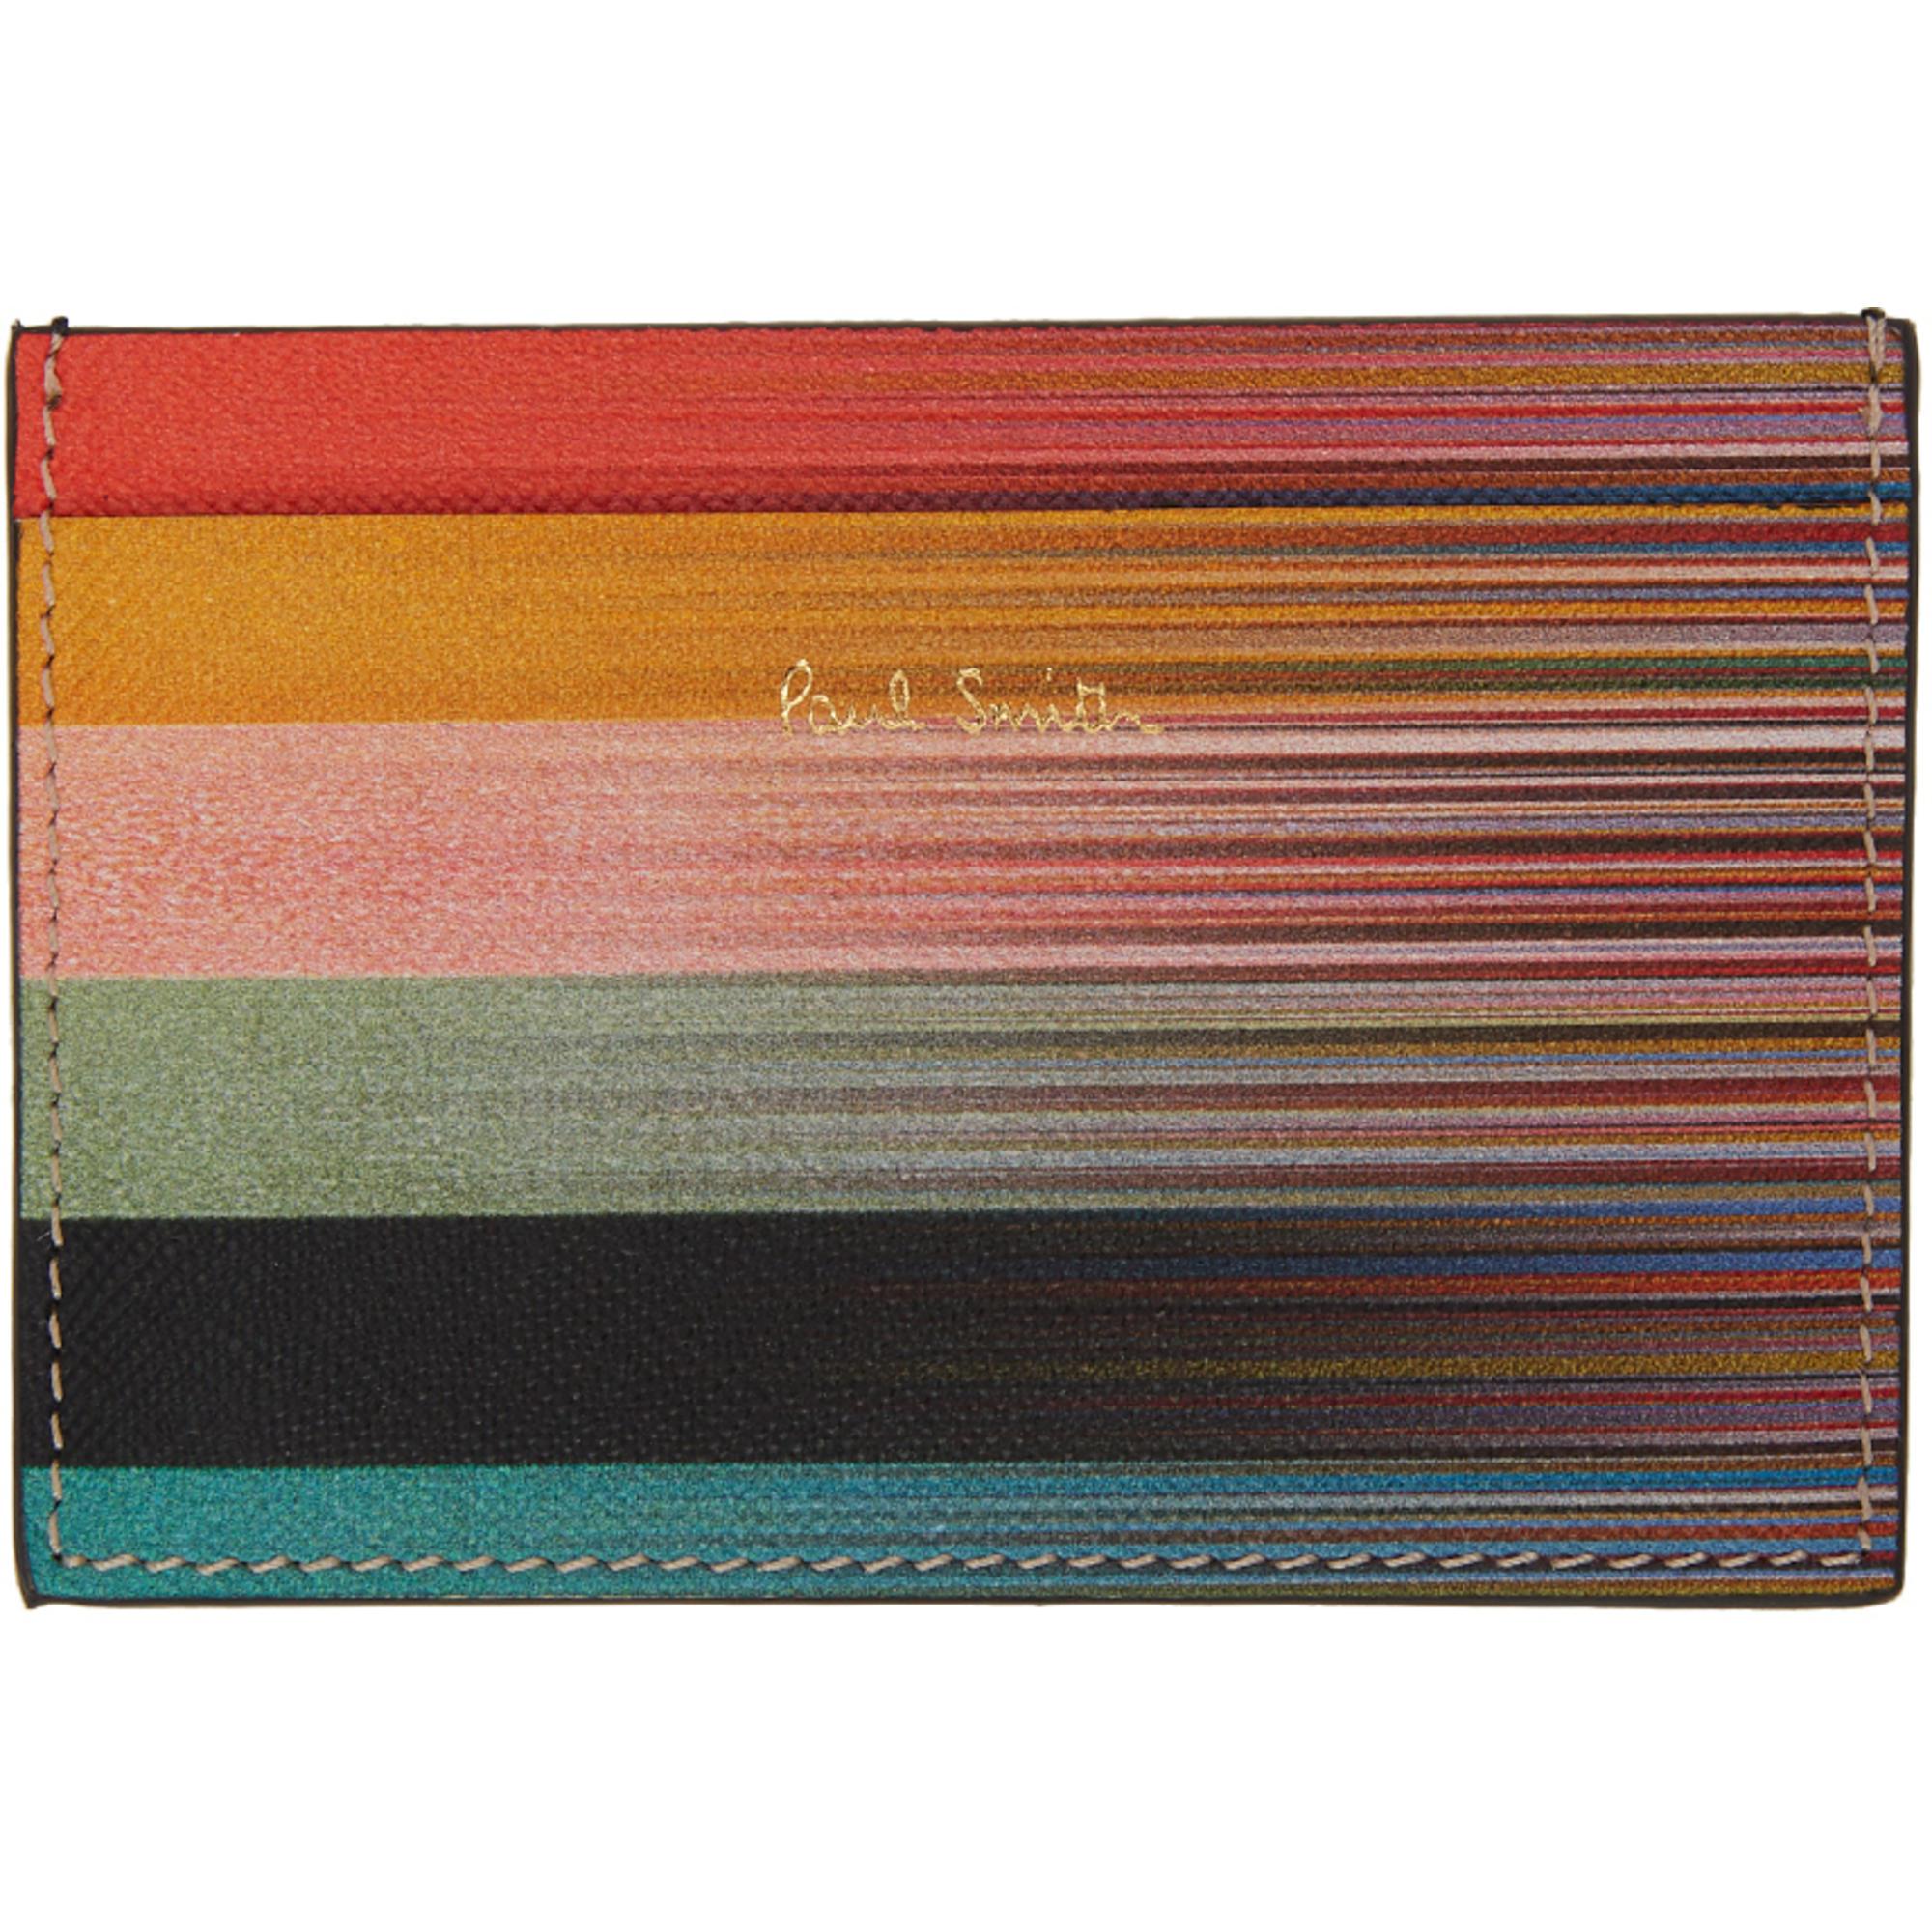 Paul Smith Leather Multicolor Artist Stripe Card Holder for Men - Lyst